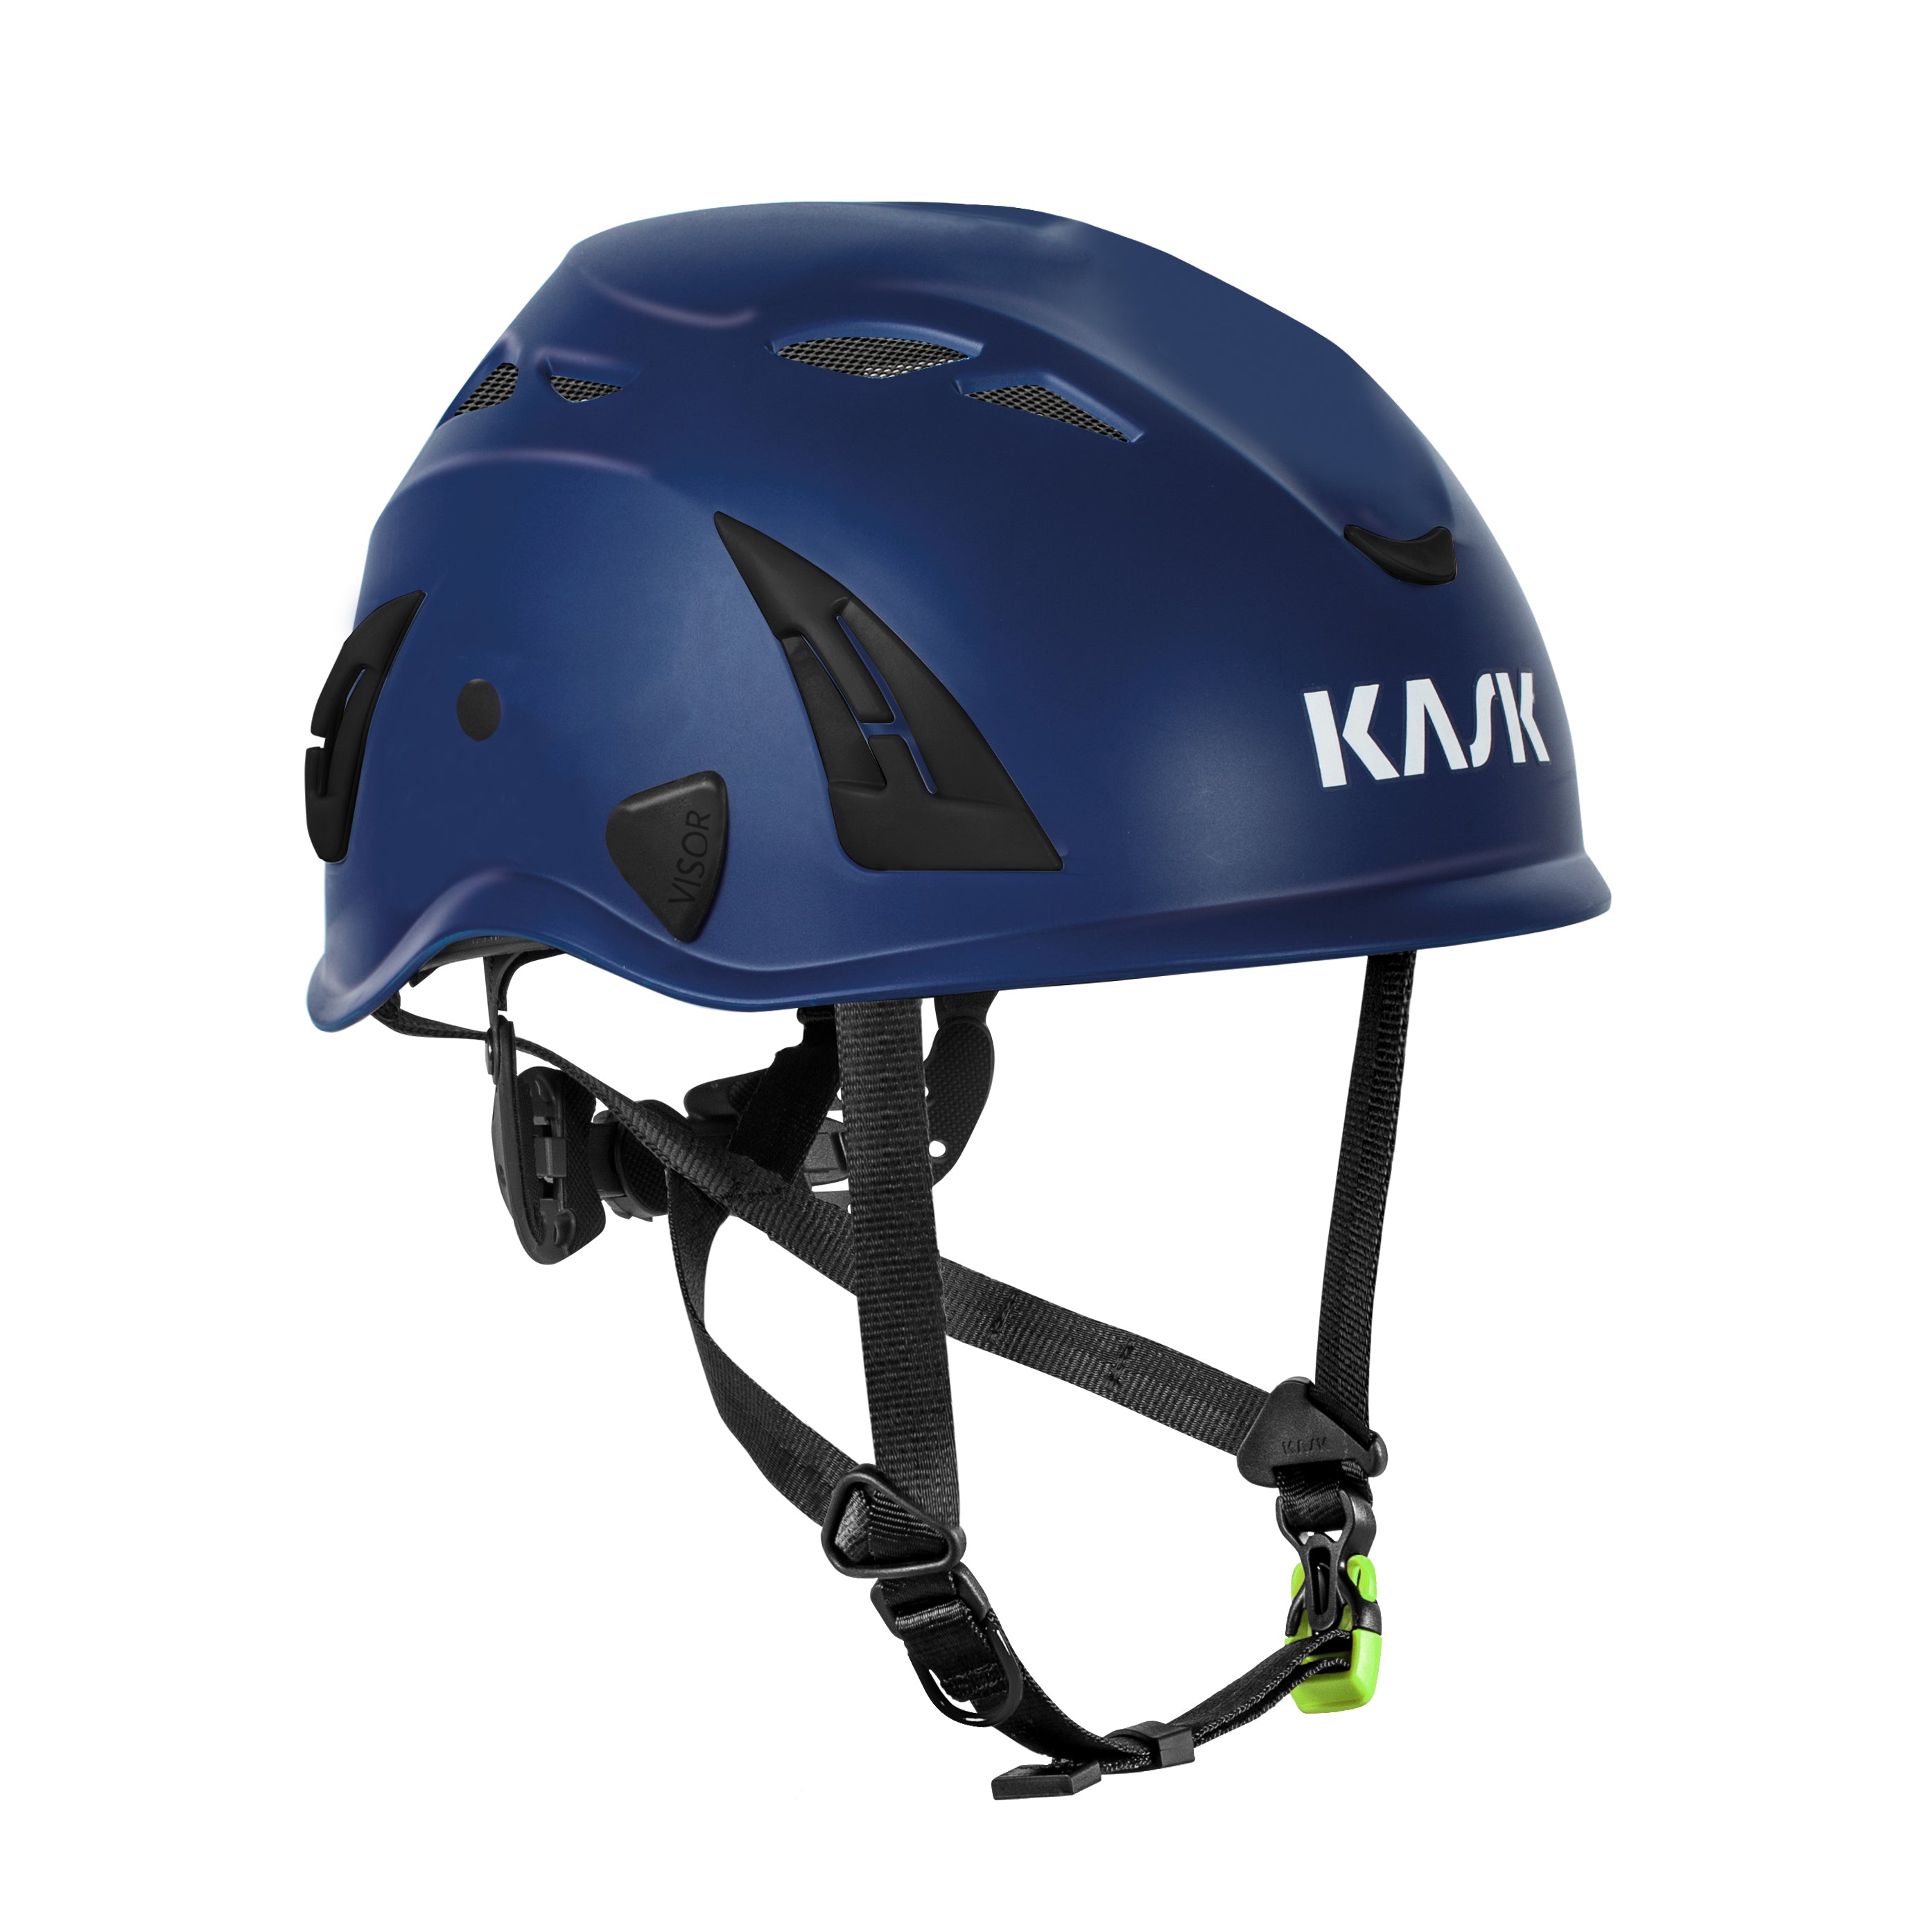 WHE00108 KASK Super Plasma PL Helmet - EN12492